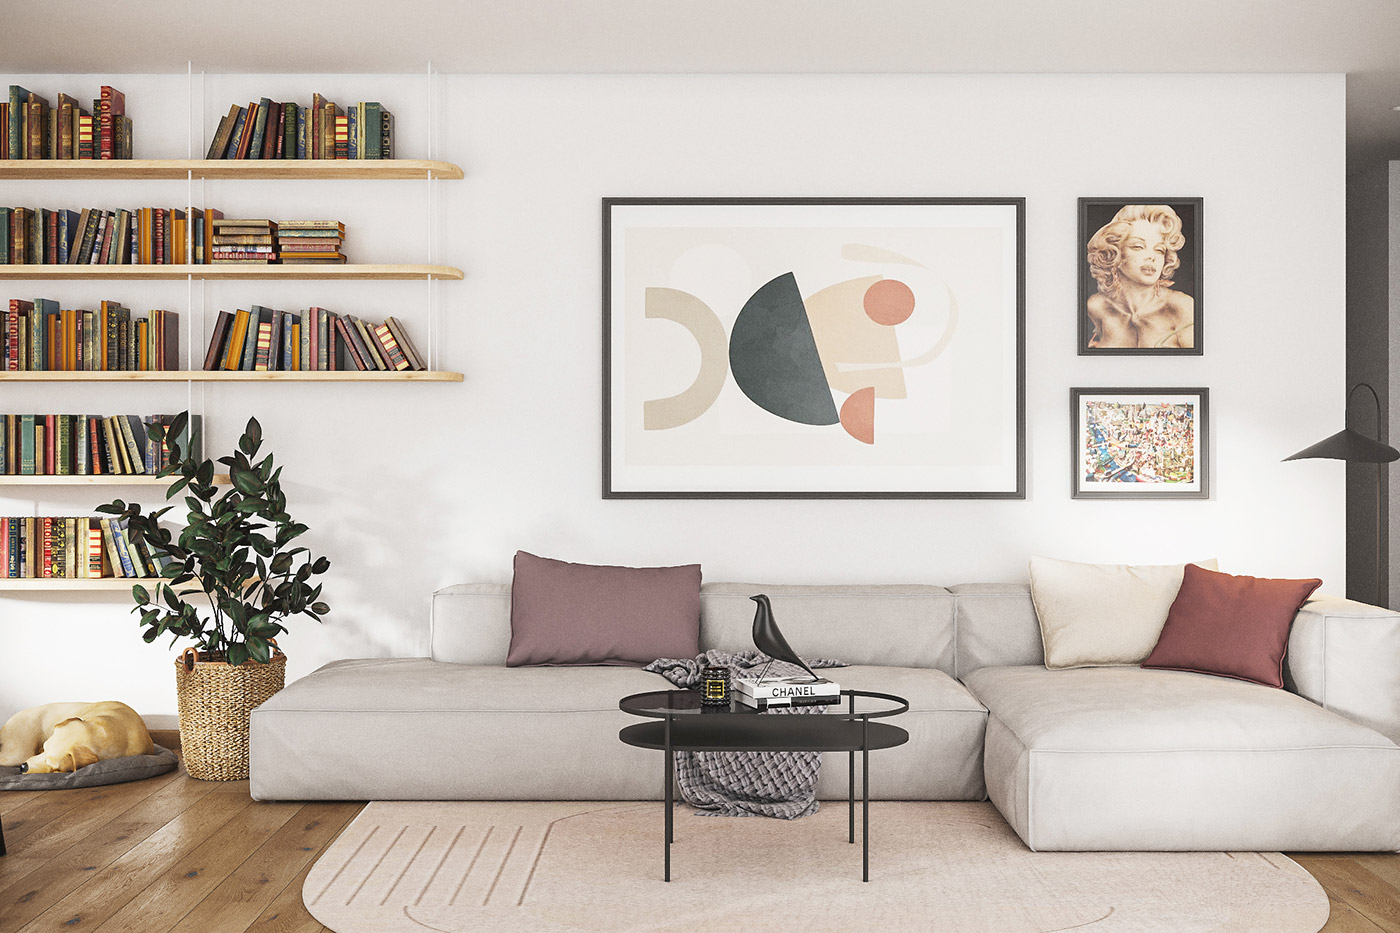 Prostornina | Dear Home, Family home interior design | 3D visualisations: Maria Sidorova